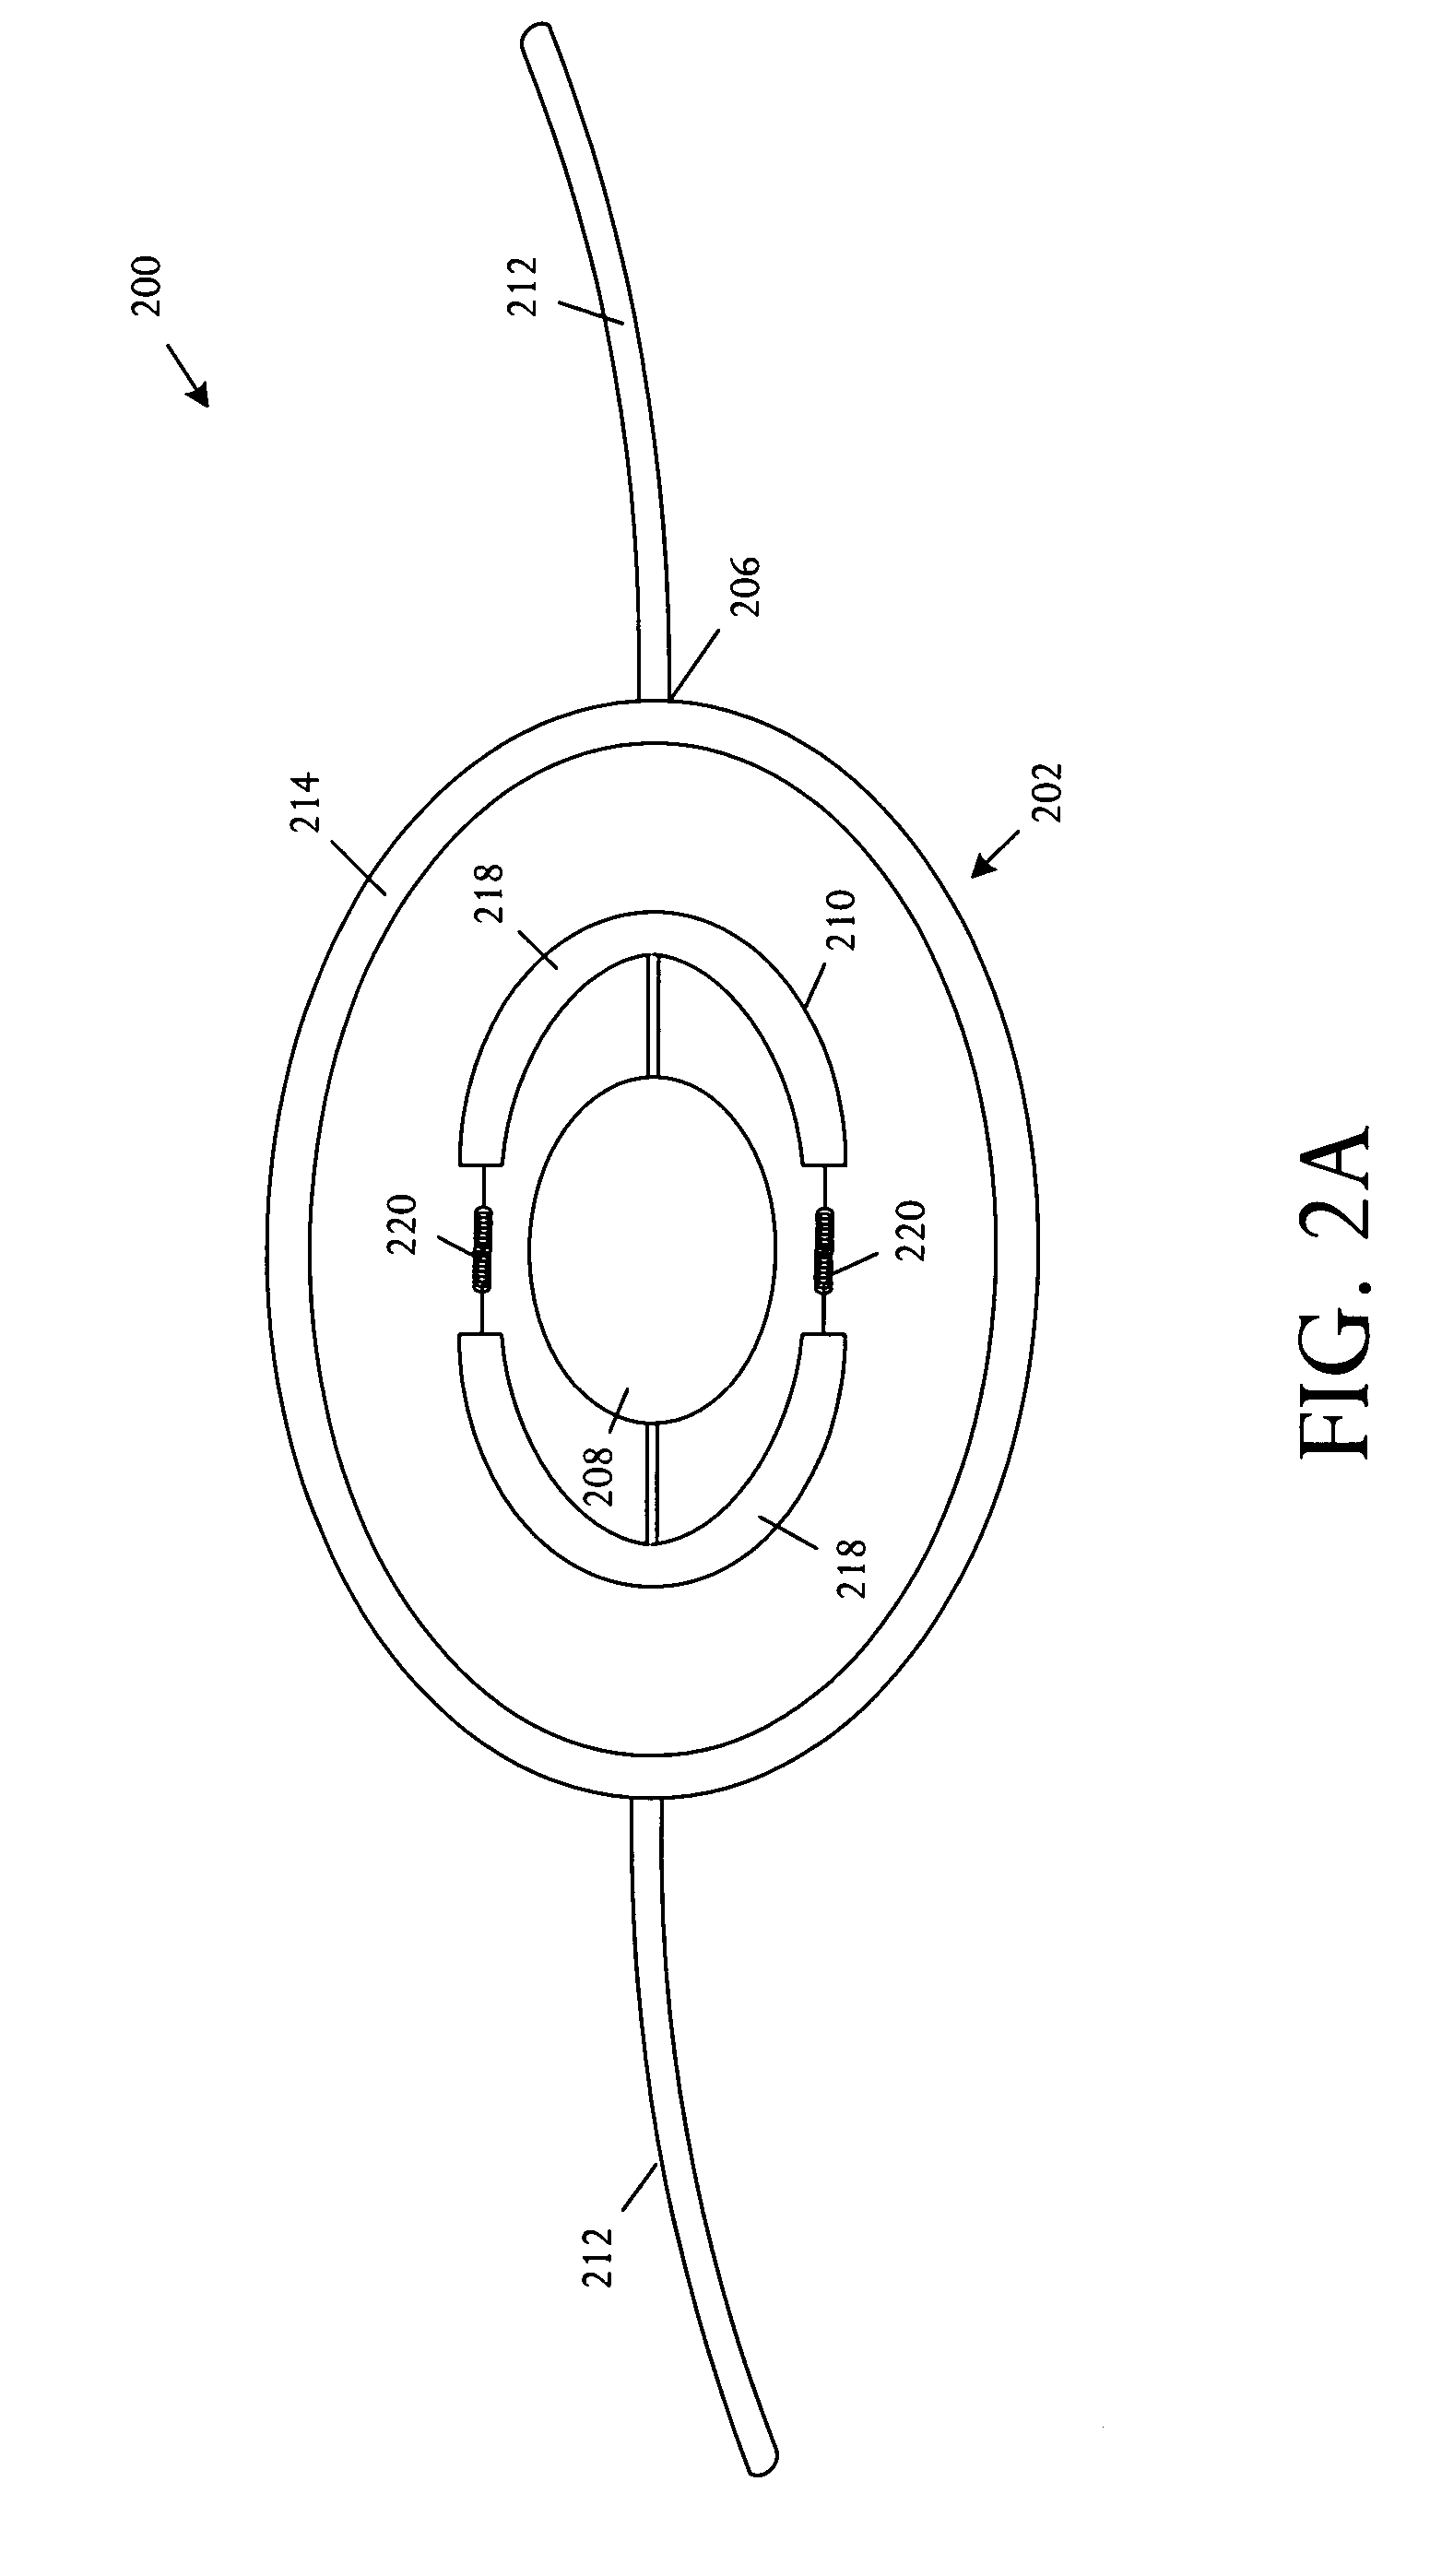 Centrifugal fan clutch for an electronics cooling fan